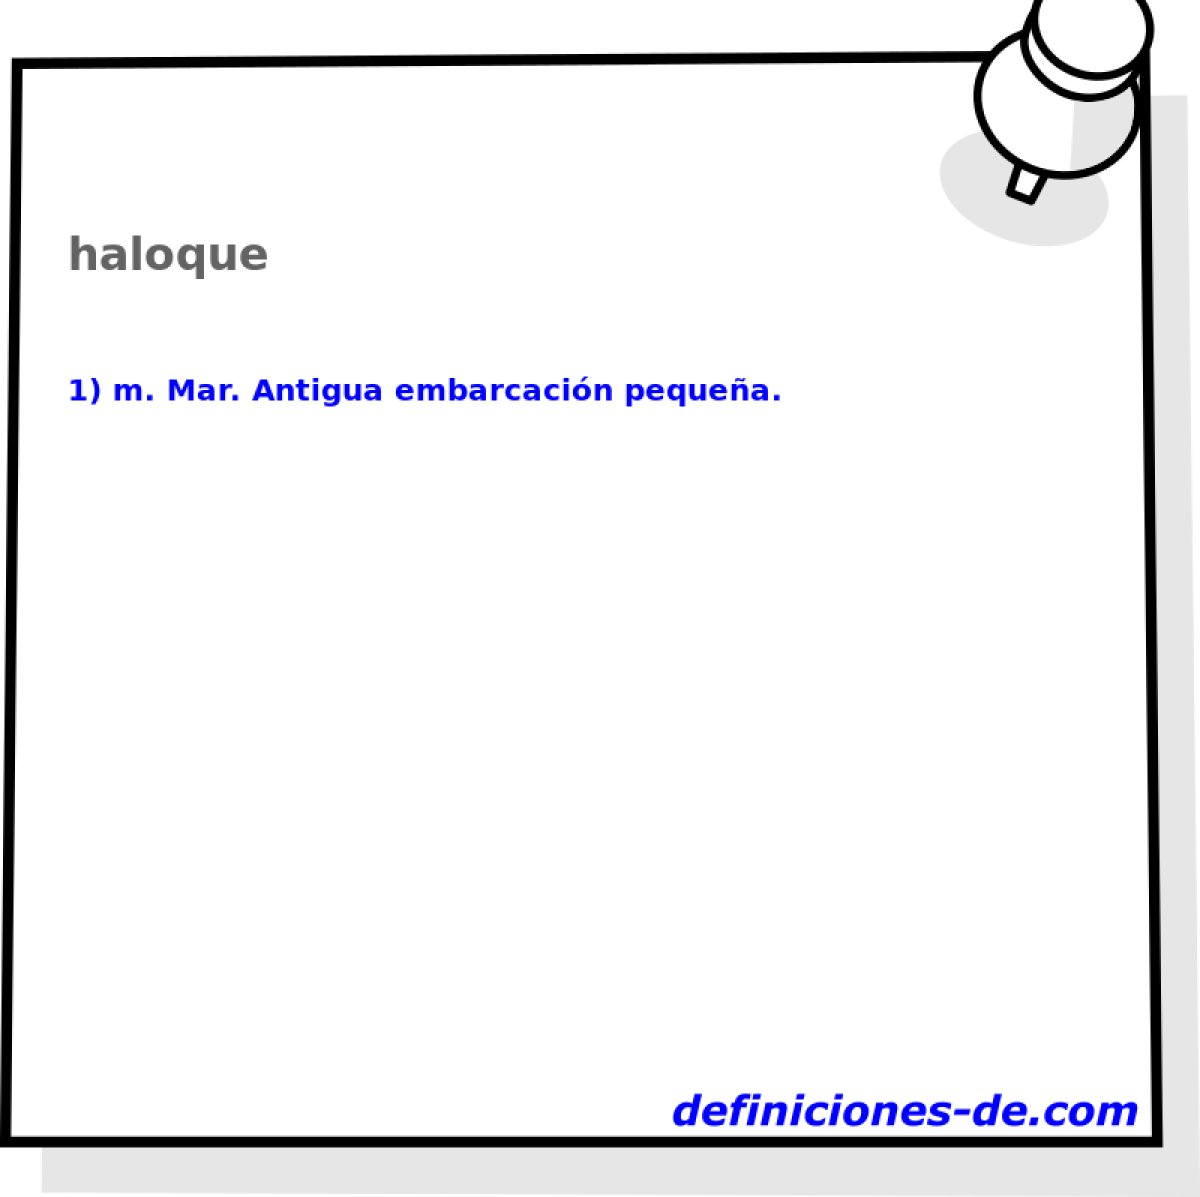 haloque 